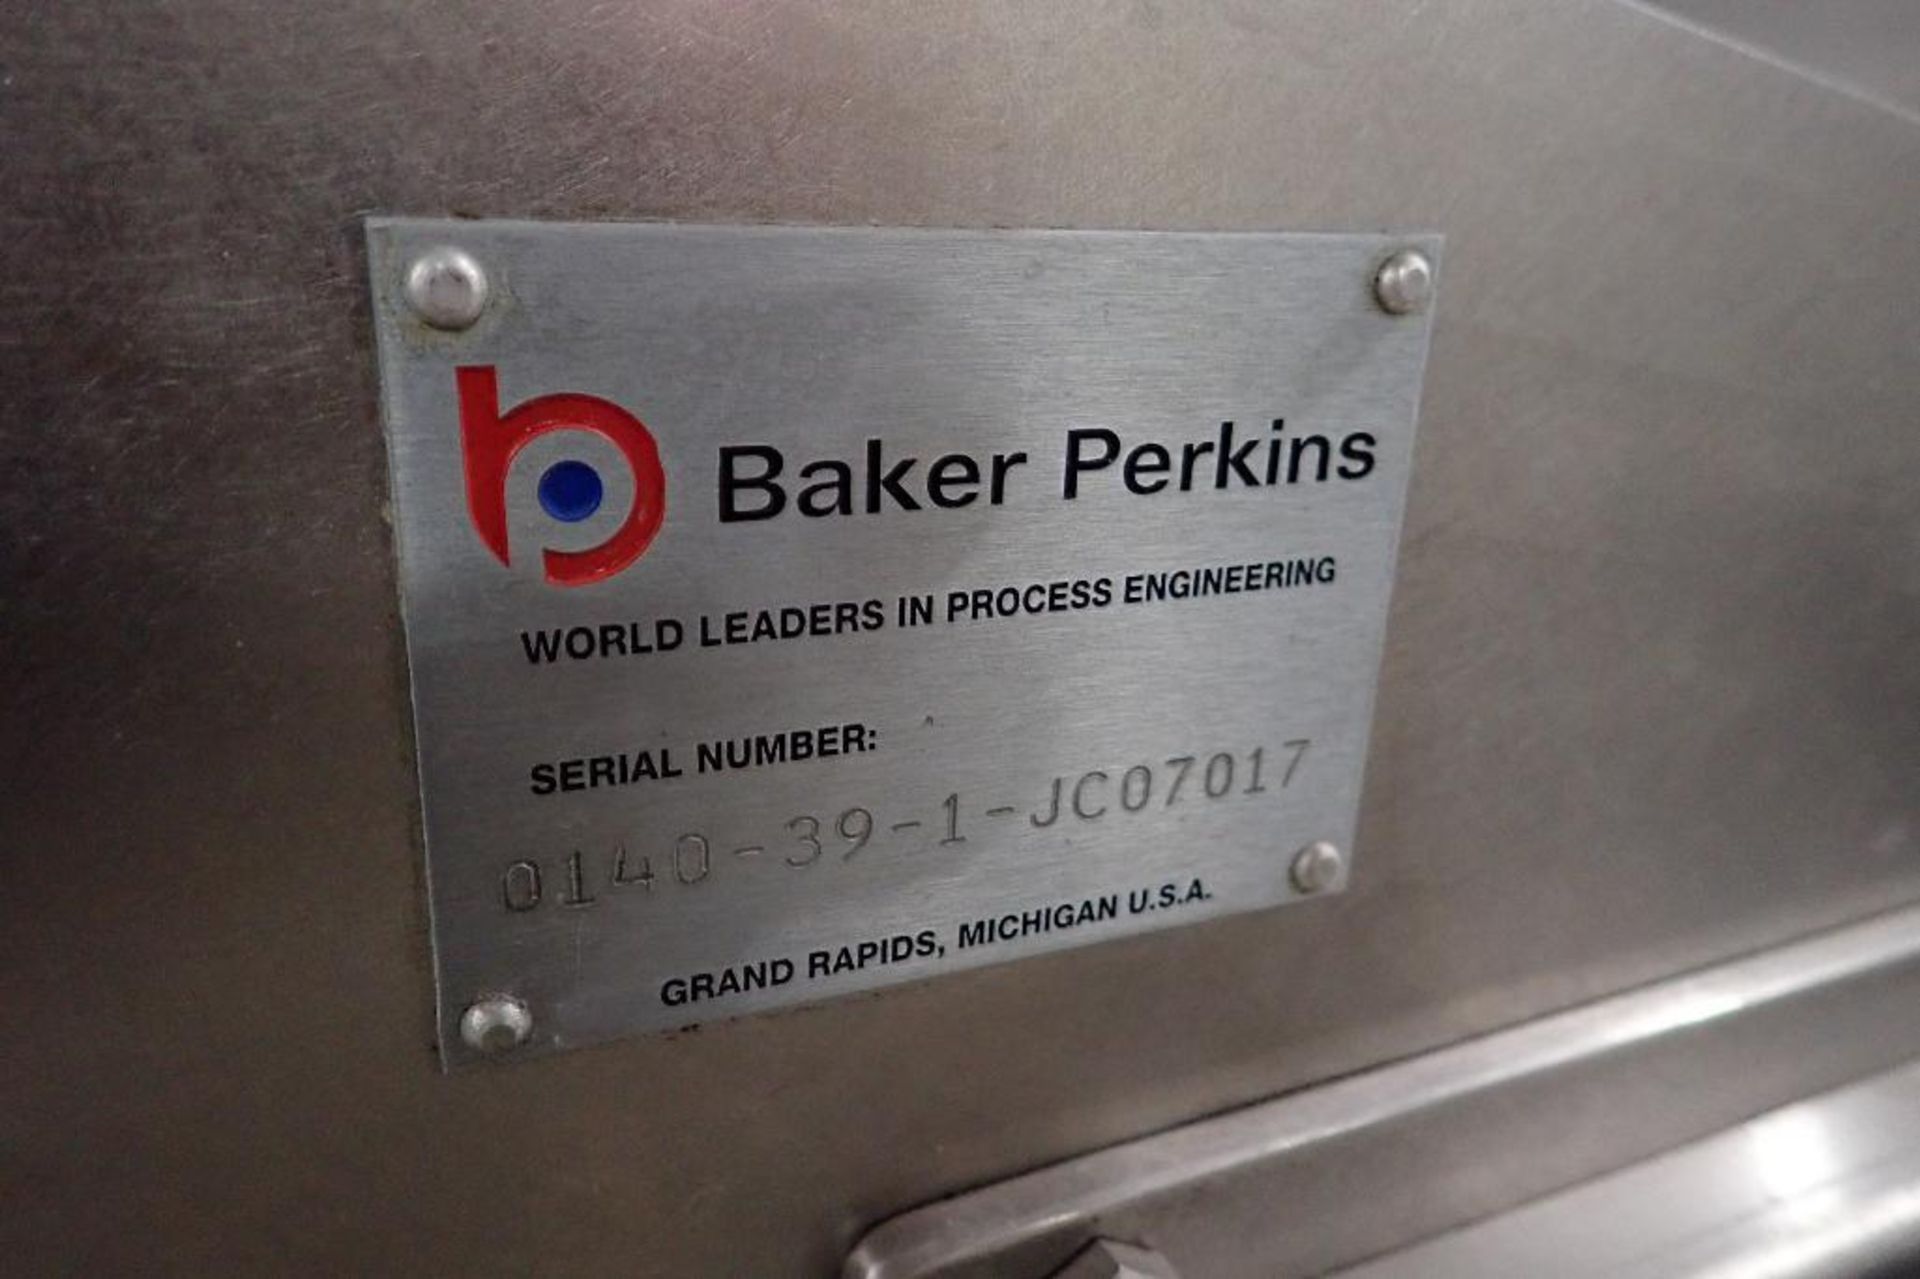 Baker Perkins EM390 rotary moulder, SN 0140-39-1-JC07017, 40.5 in. wide, has compression roller, no - Image 15 of 15